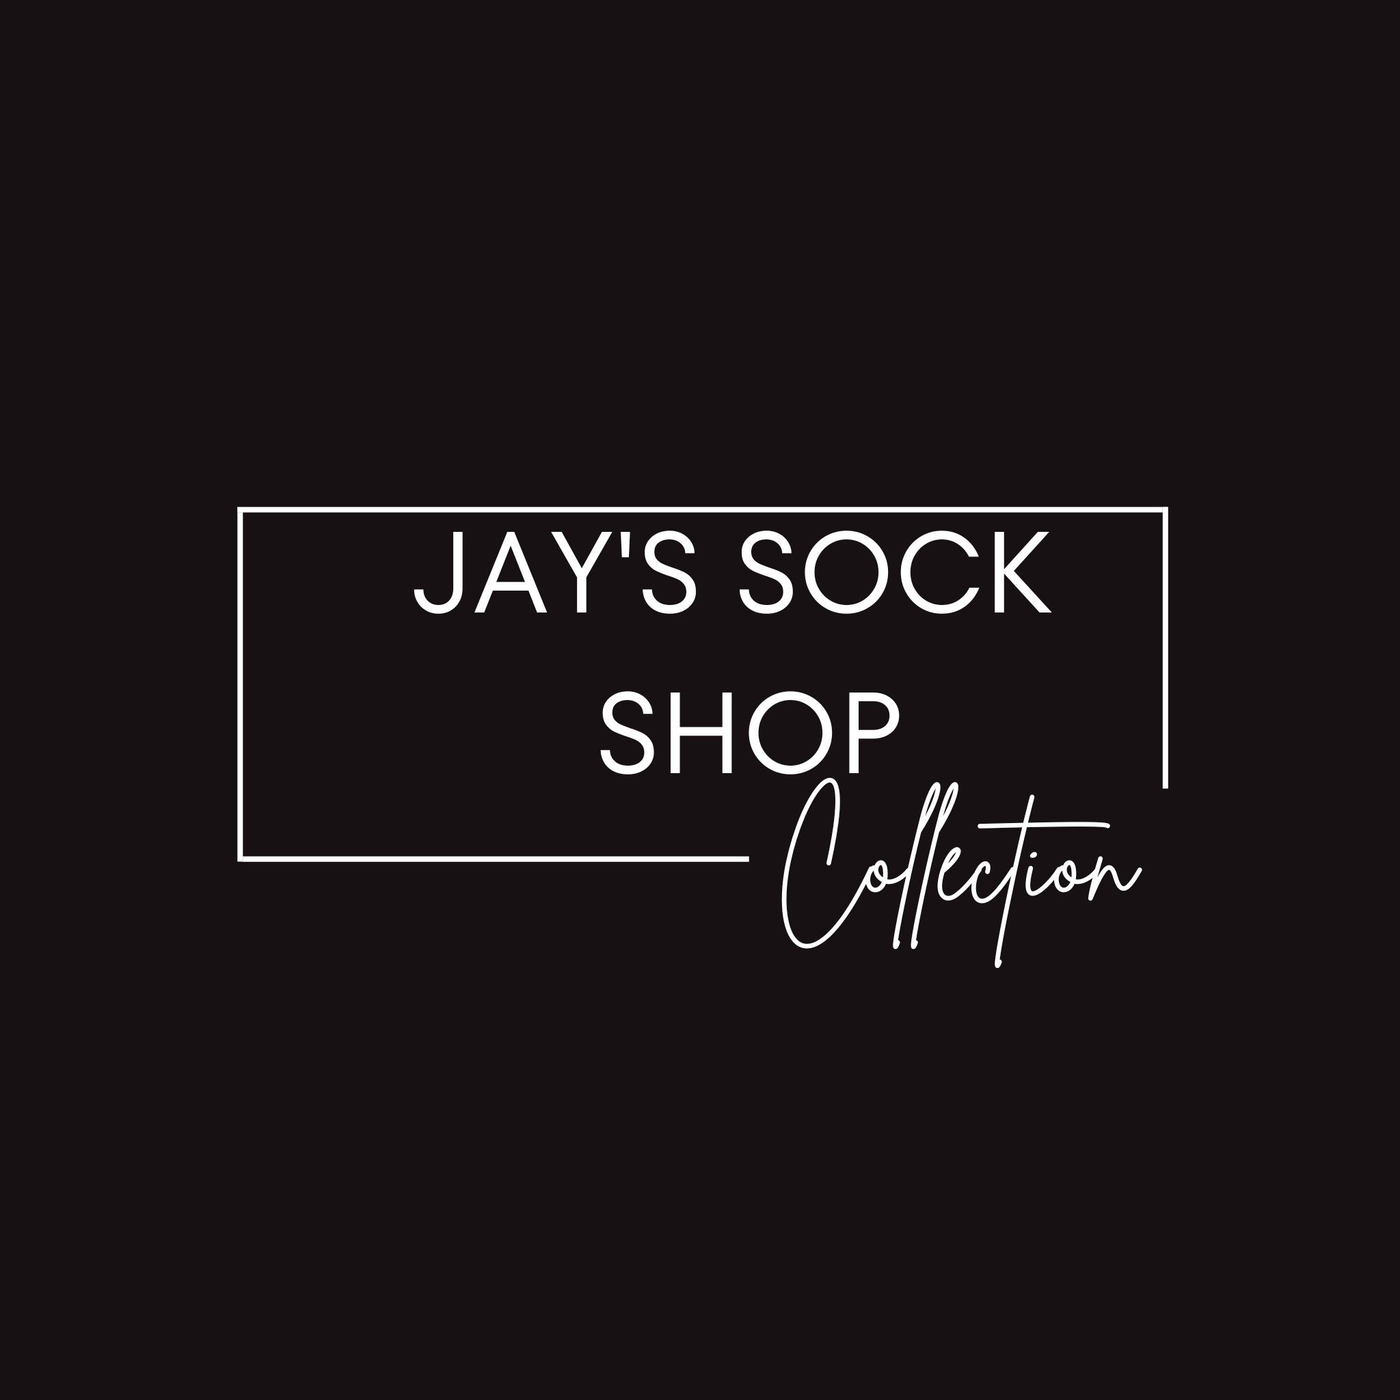 Jay's Sock Shop